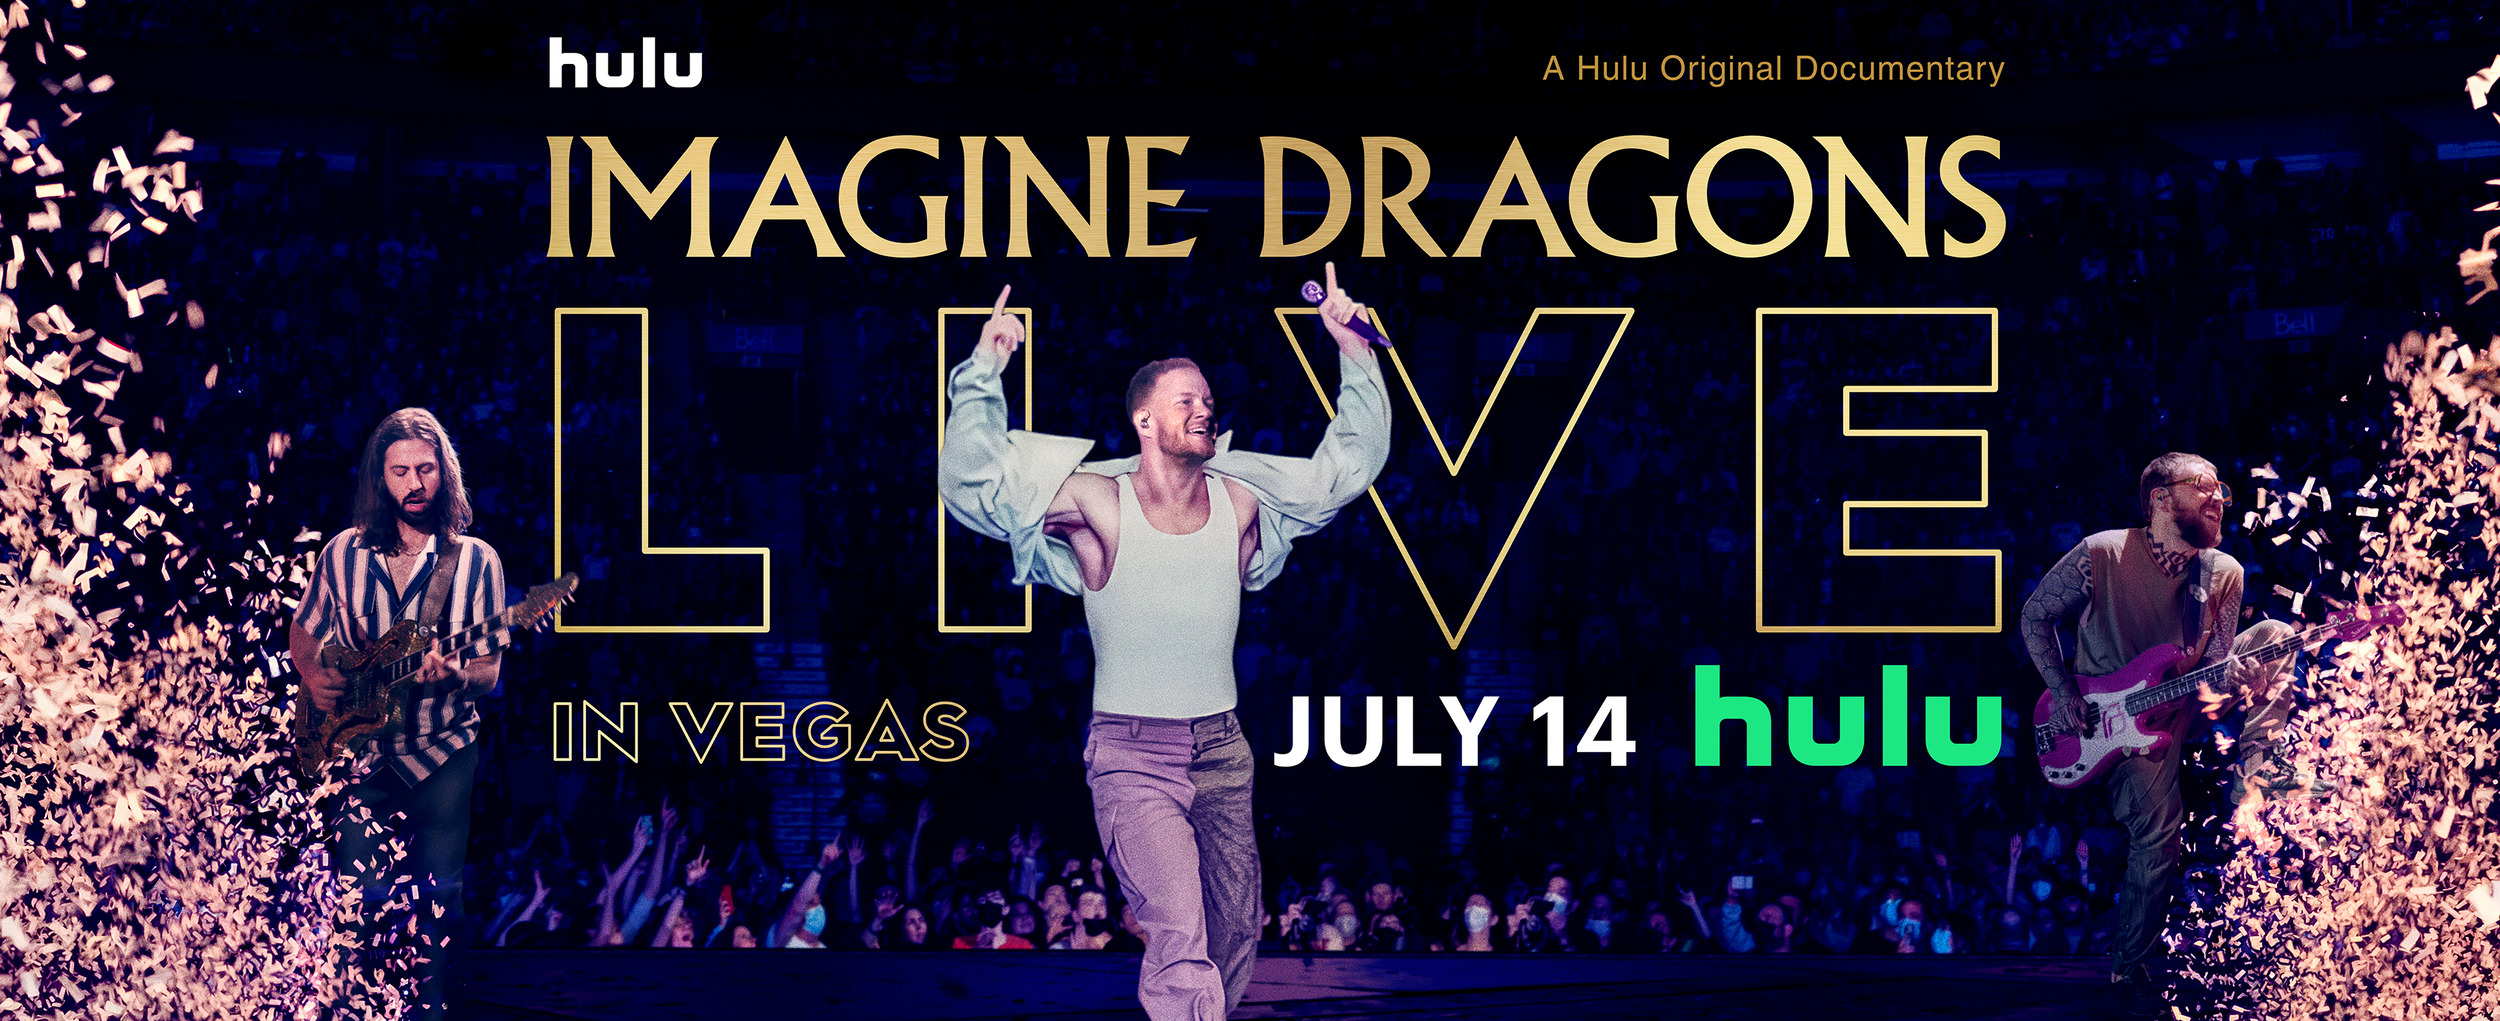 Mega Sized TV Poster Image for Imagine Dragons Live in Vegas 